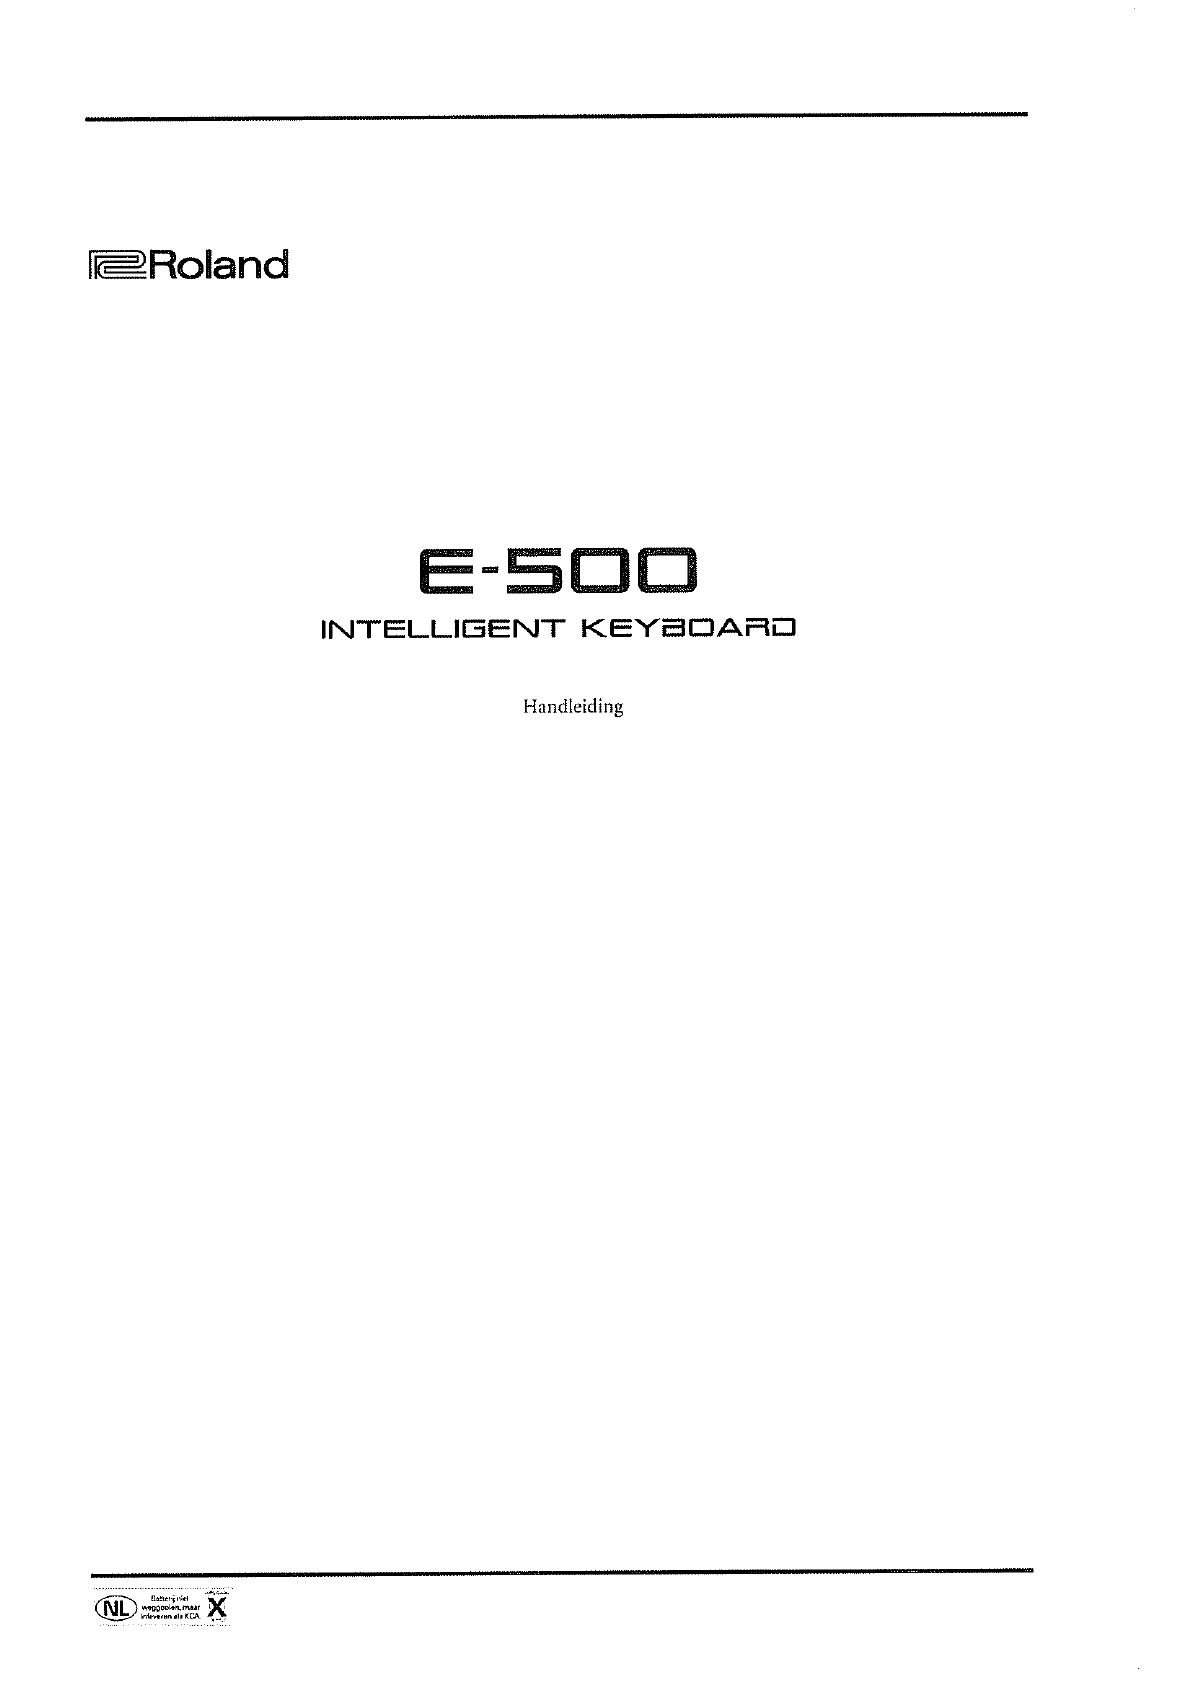 Manual Roland E-500 (page 1 of 78) (Dutch)